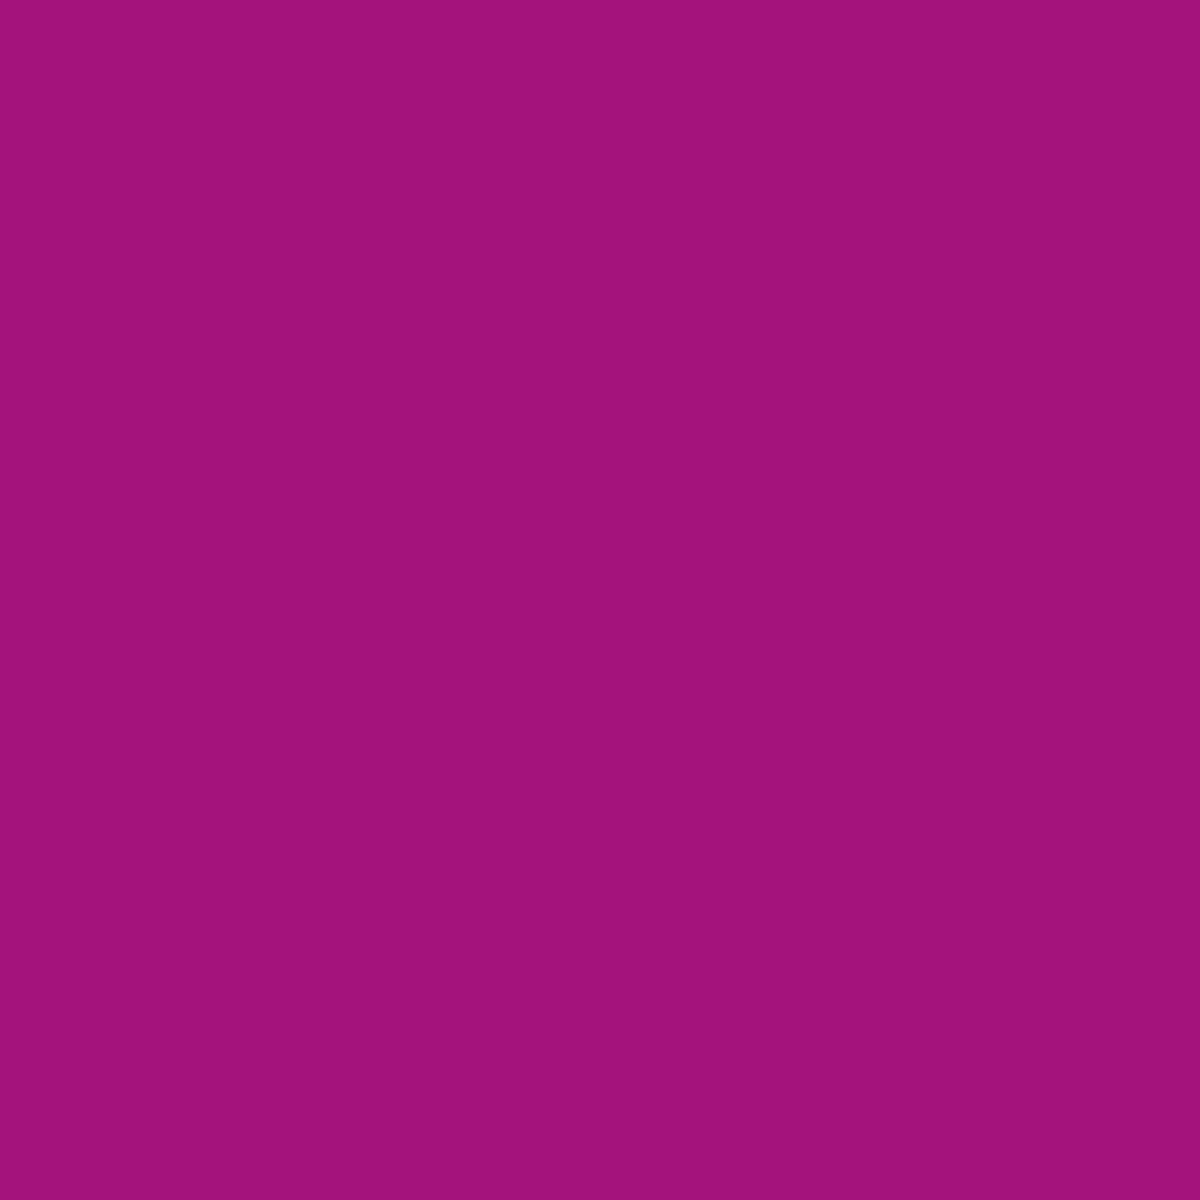 Liquitex - Acrylic Gouache 59ml S2 - Fluorescent Violet